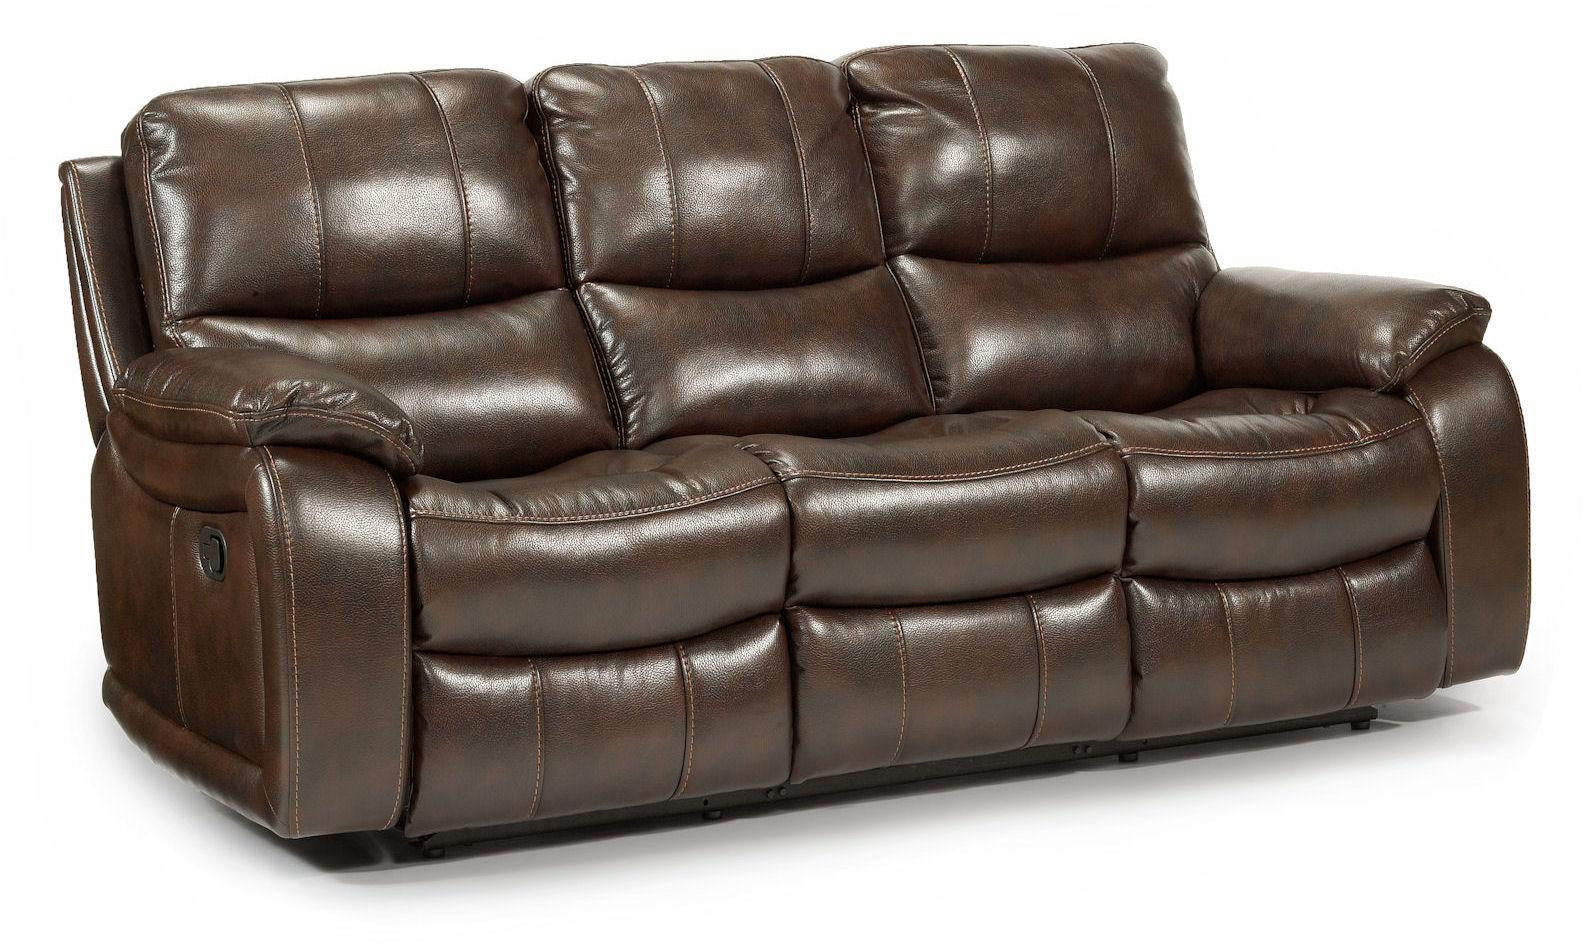 Best ideas about Flexsteel Leather Reclining Sofa
. Save or Pin Flexsteel Latitudes Woodstock 1298 62 Double Reclining Now.